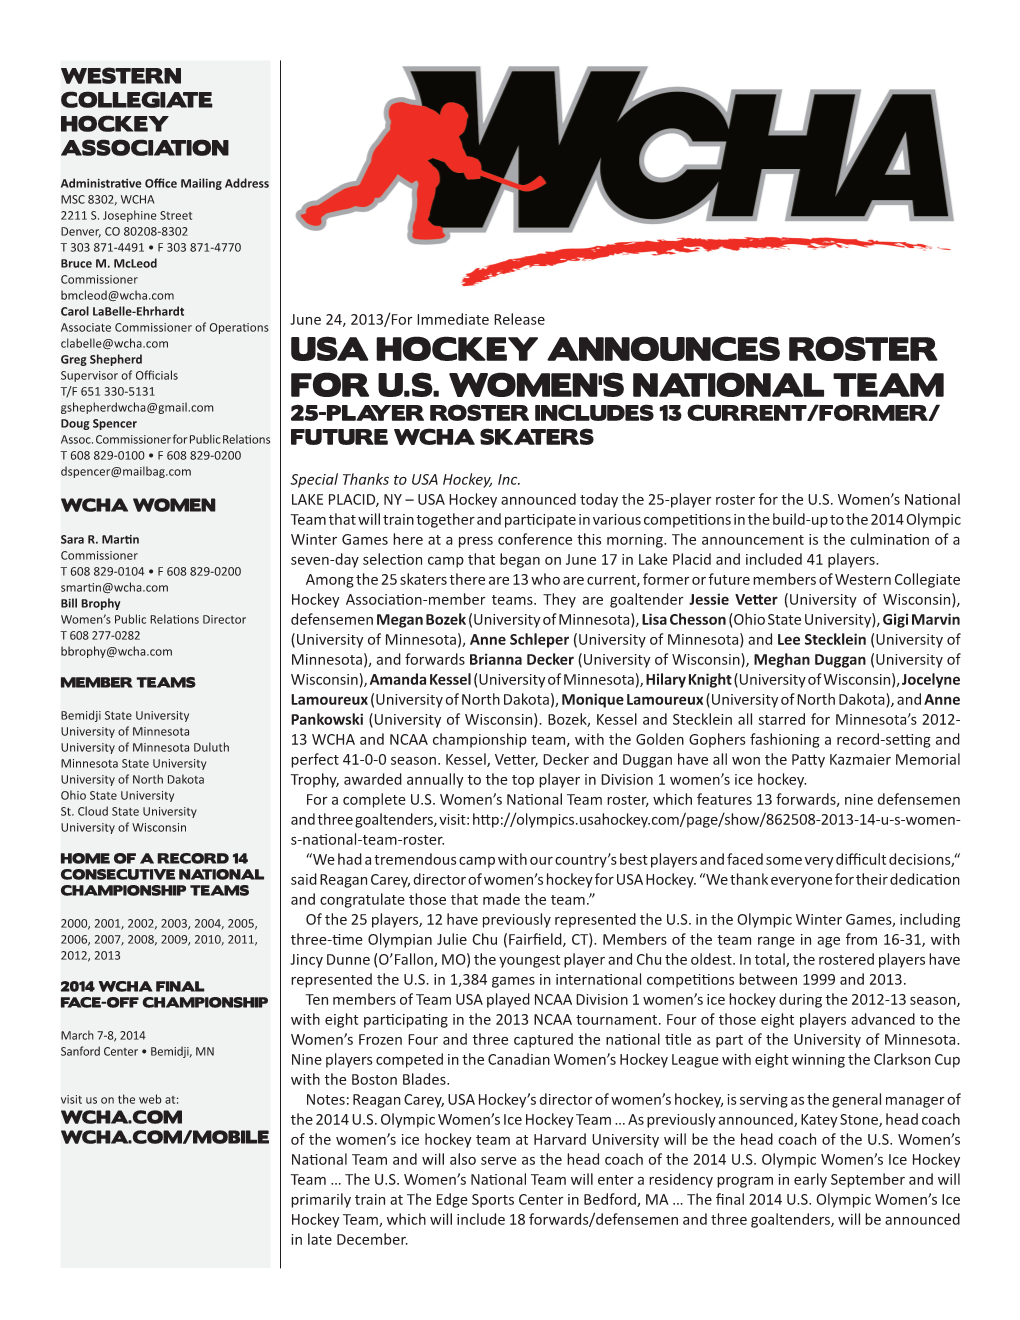 Usa Hockey Announces Roster for U.S. Women's